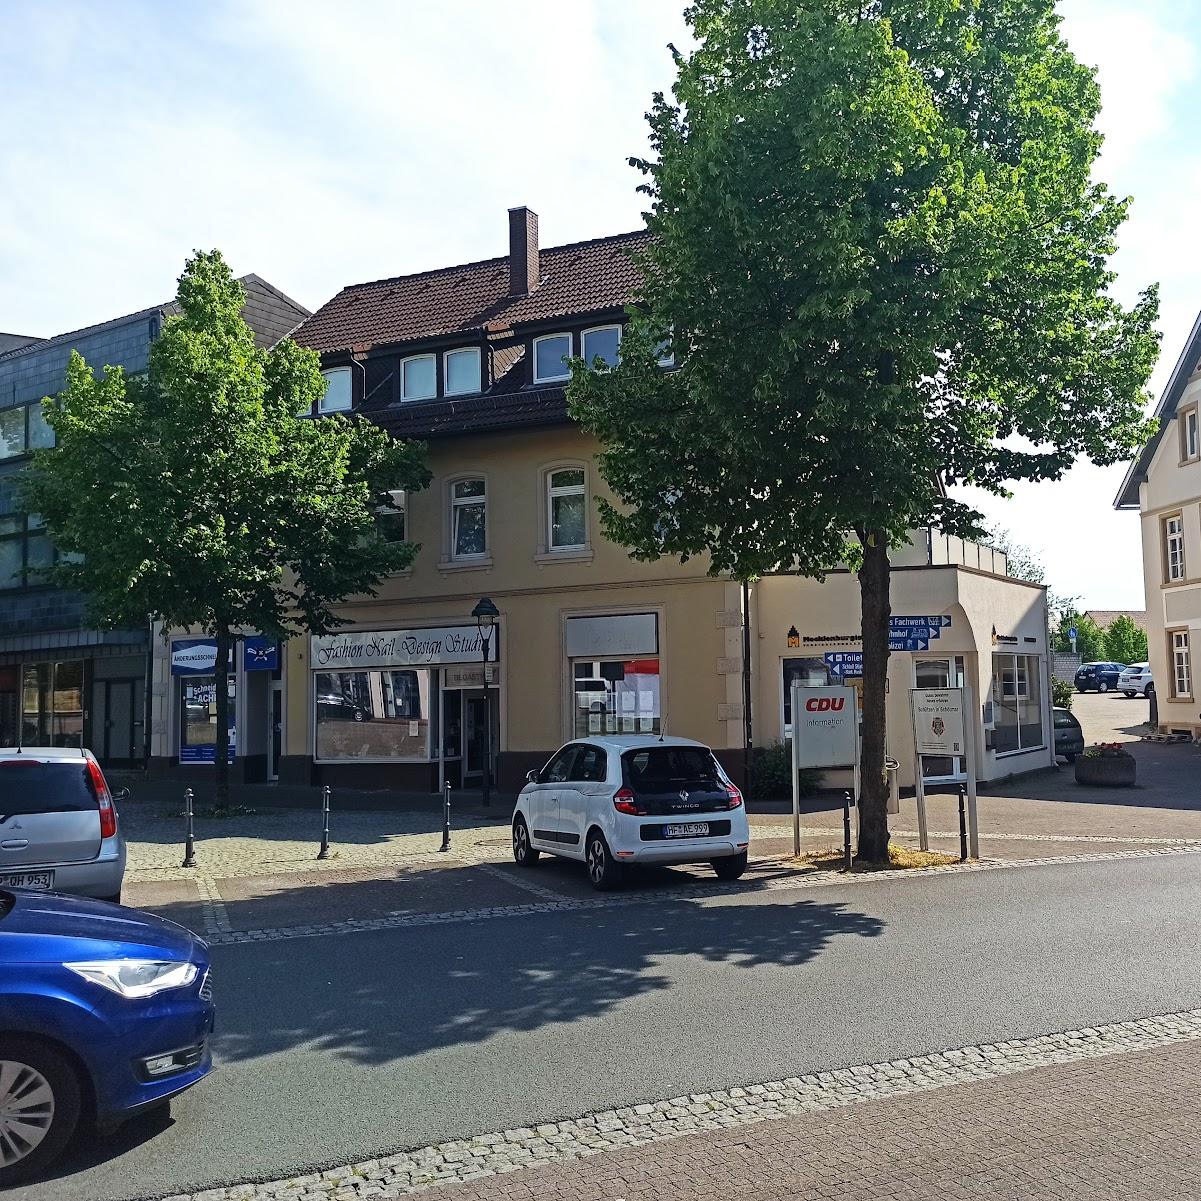 Restaurant "Hotel Junkerhaus" in Bad Salzuflen